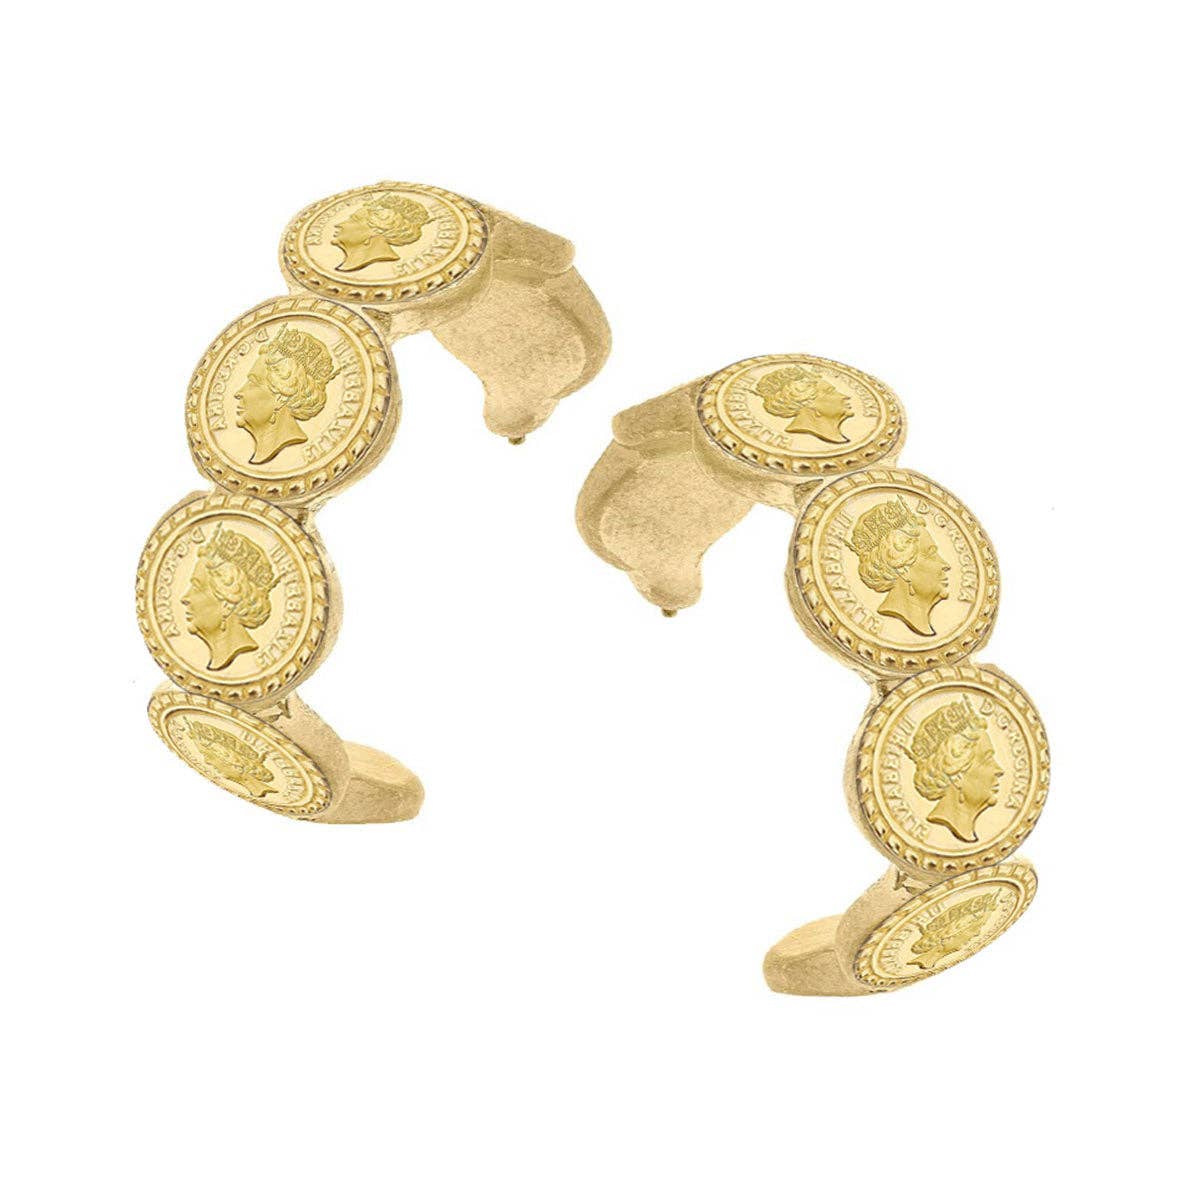 CANVAS Style - Queen Elizabeth Coin Hoop Earrings in Worn Gold